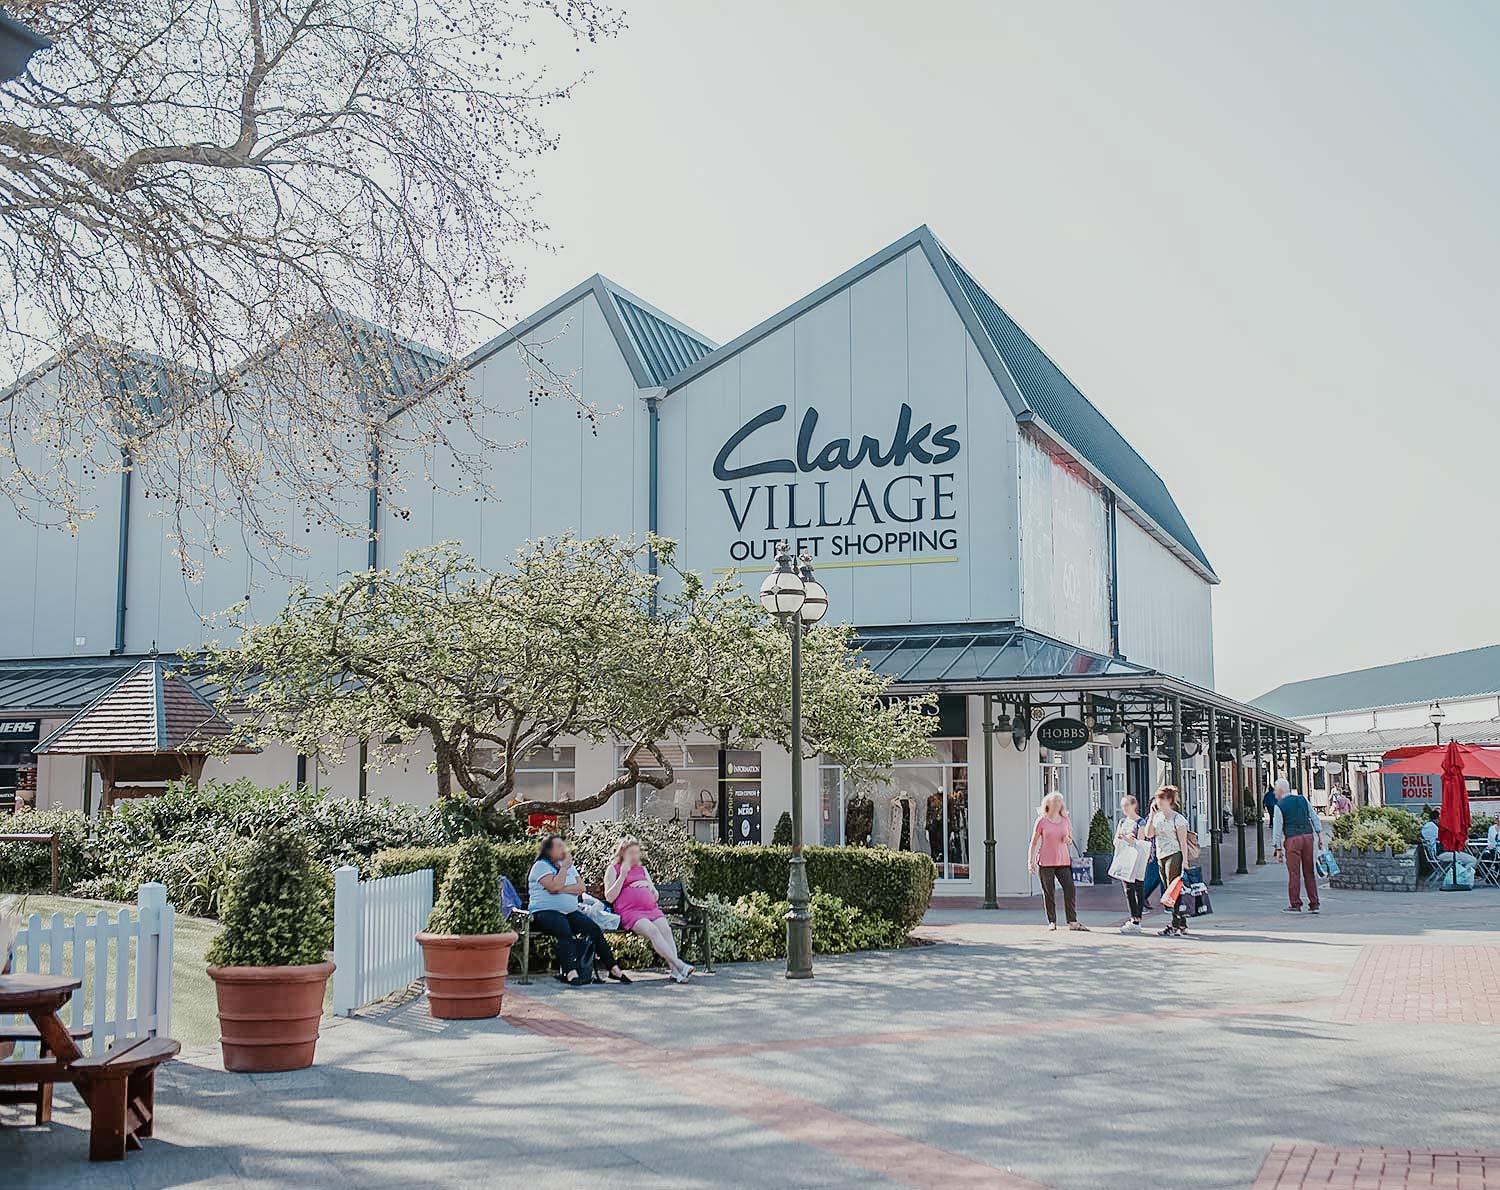 clarks village offers